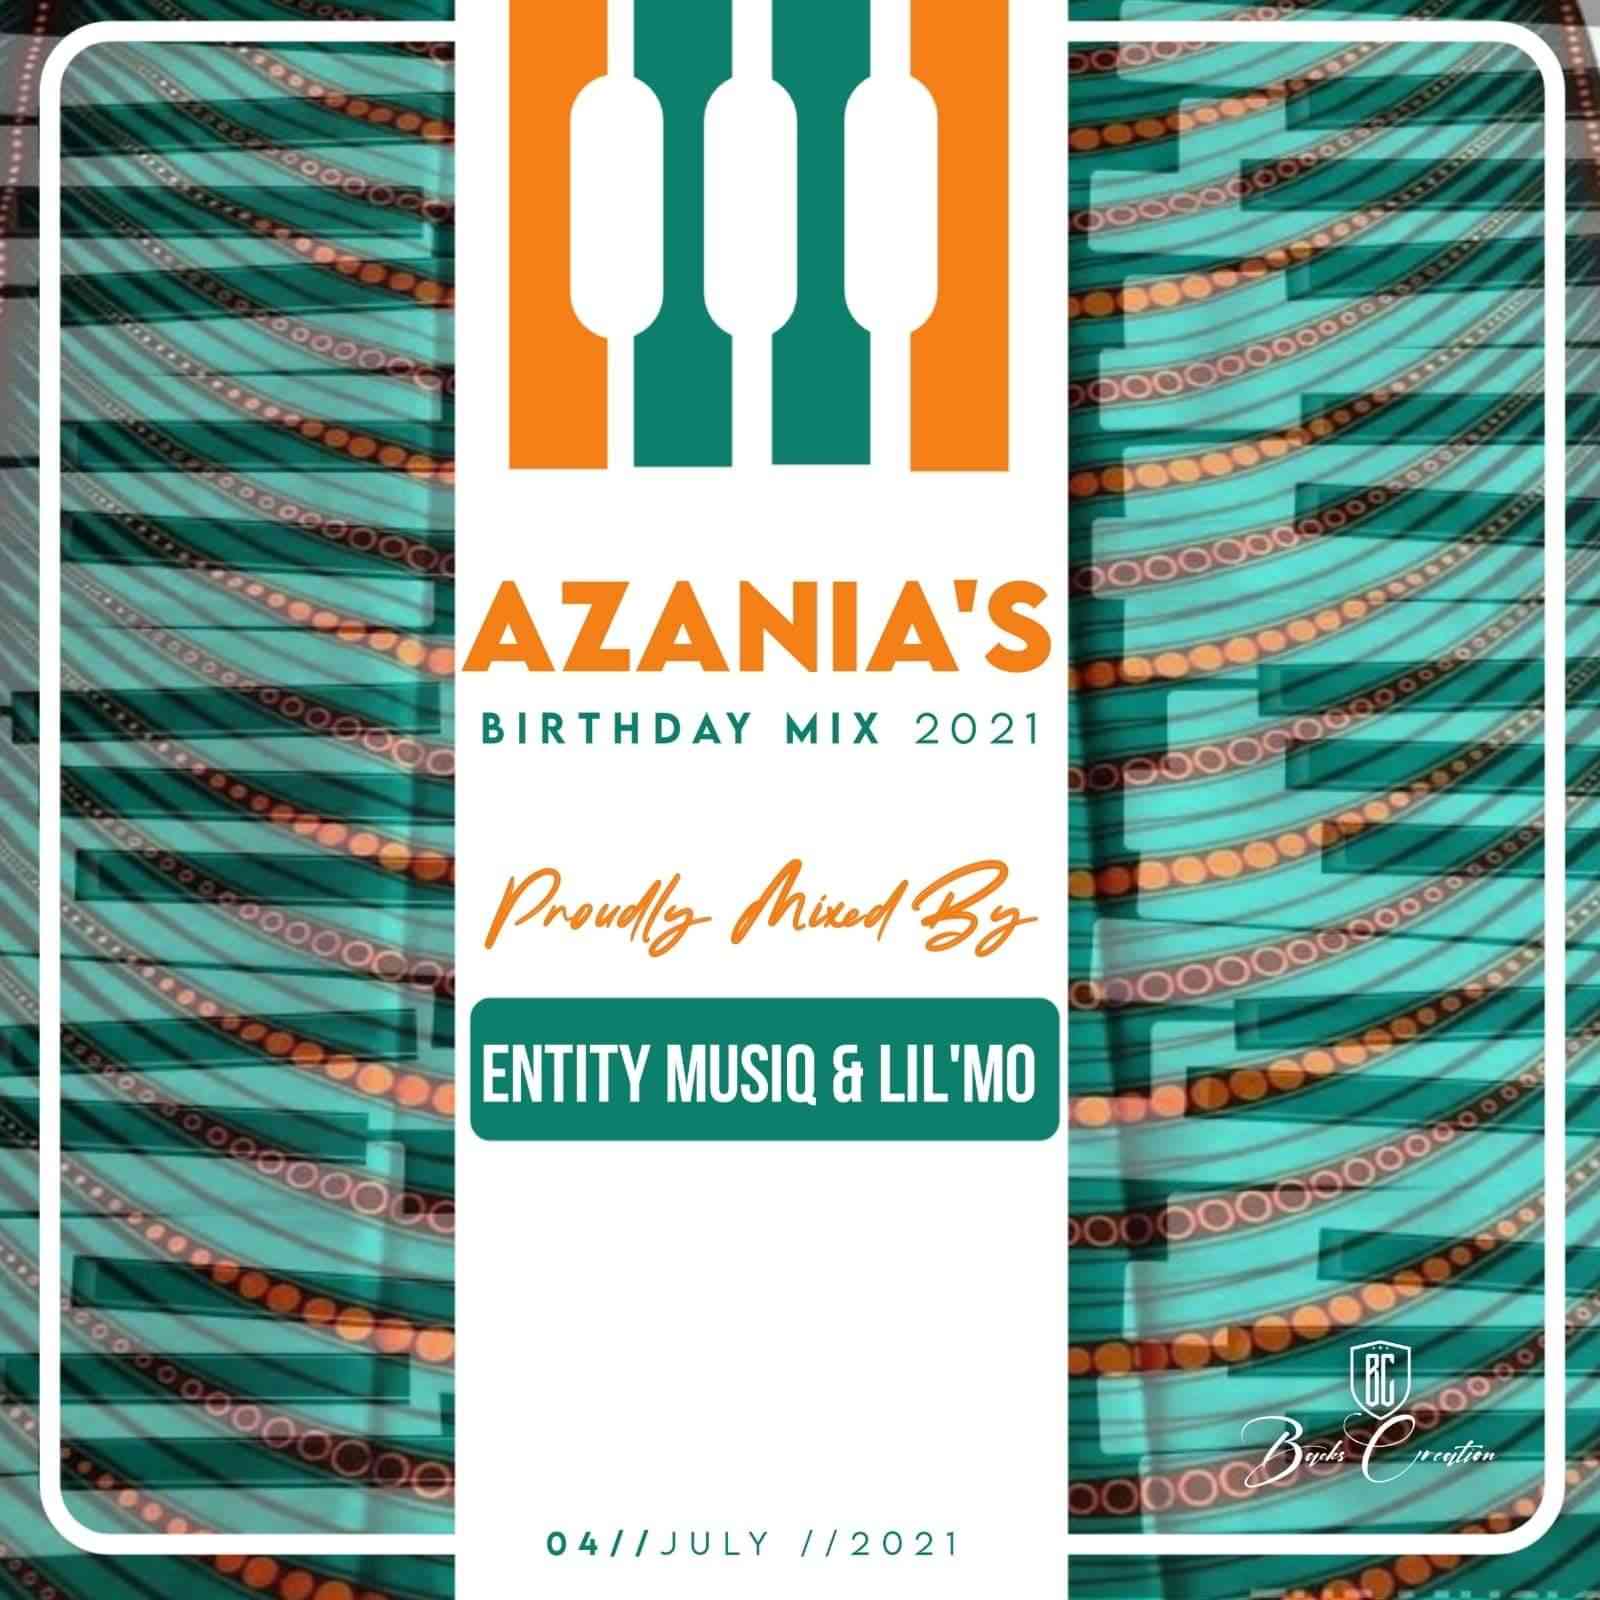 Entity MusiQ & Lilmo Azania Birthday Mix 2021